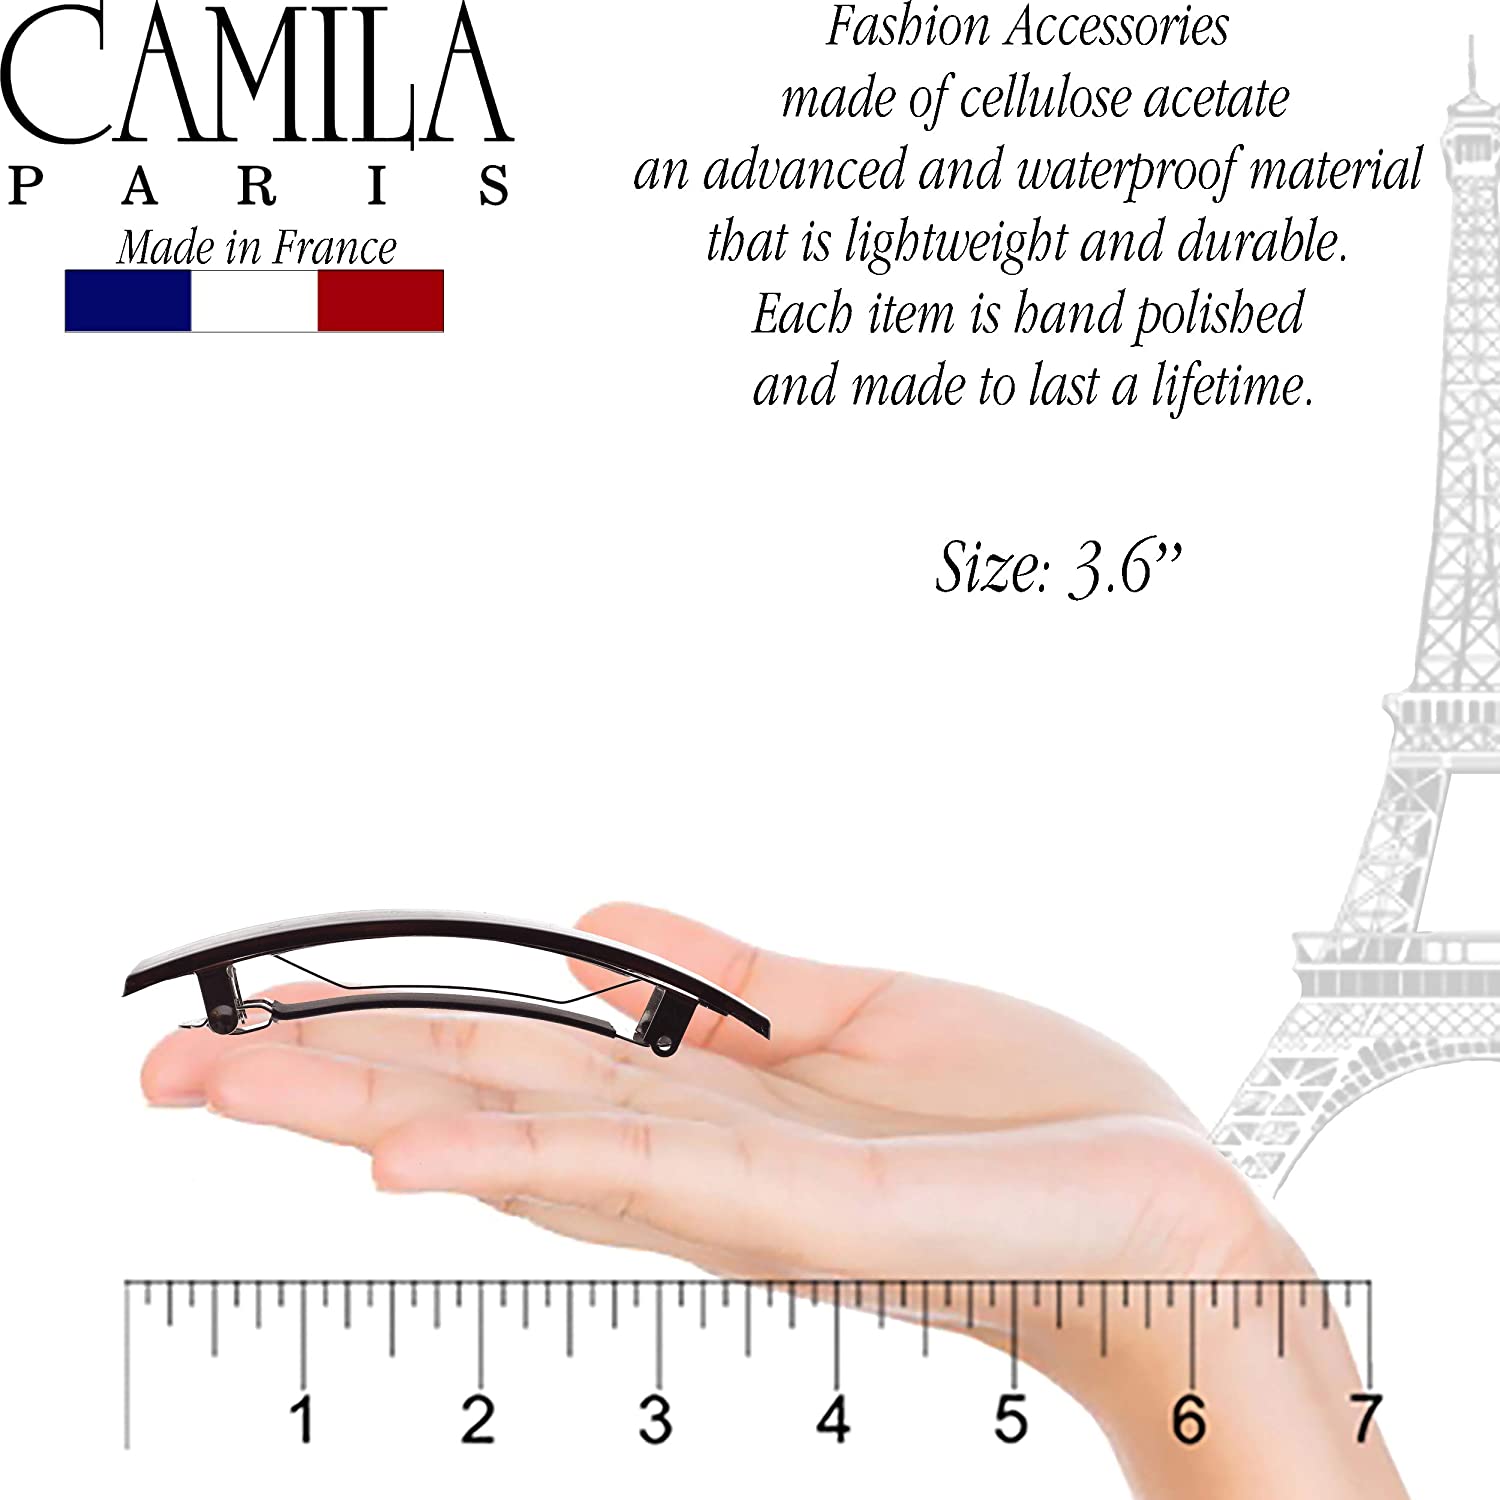 Camila Paris AD820 French Hair Barrette Classic Black Automatic Clasp